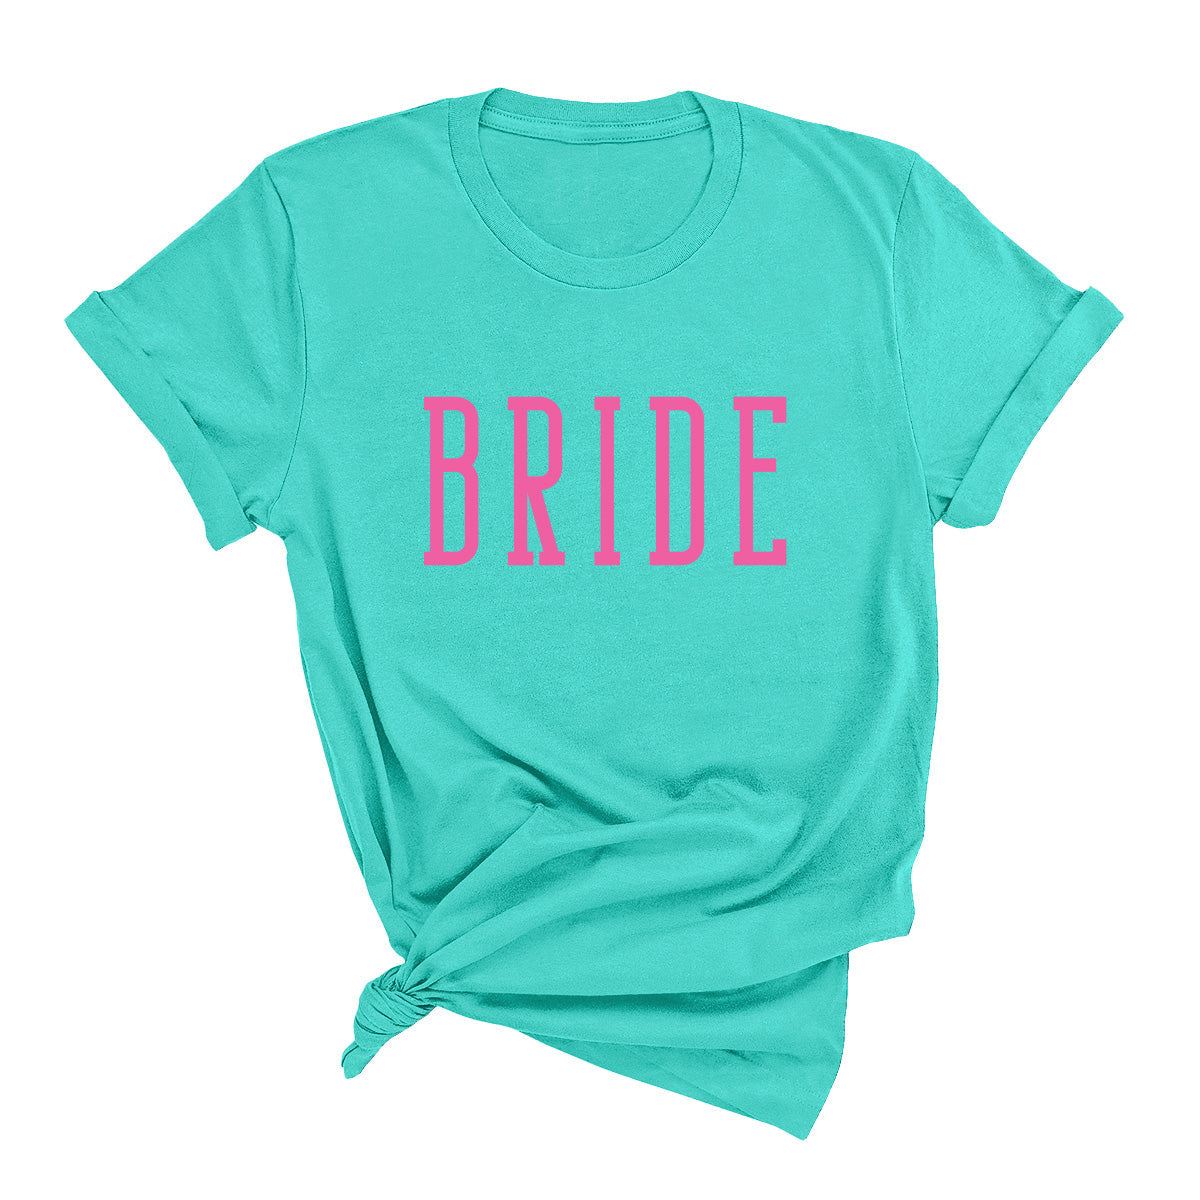 Bride T-Shirt